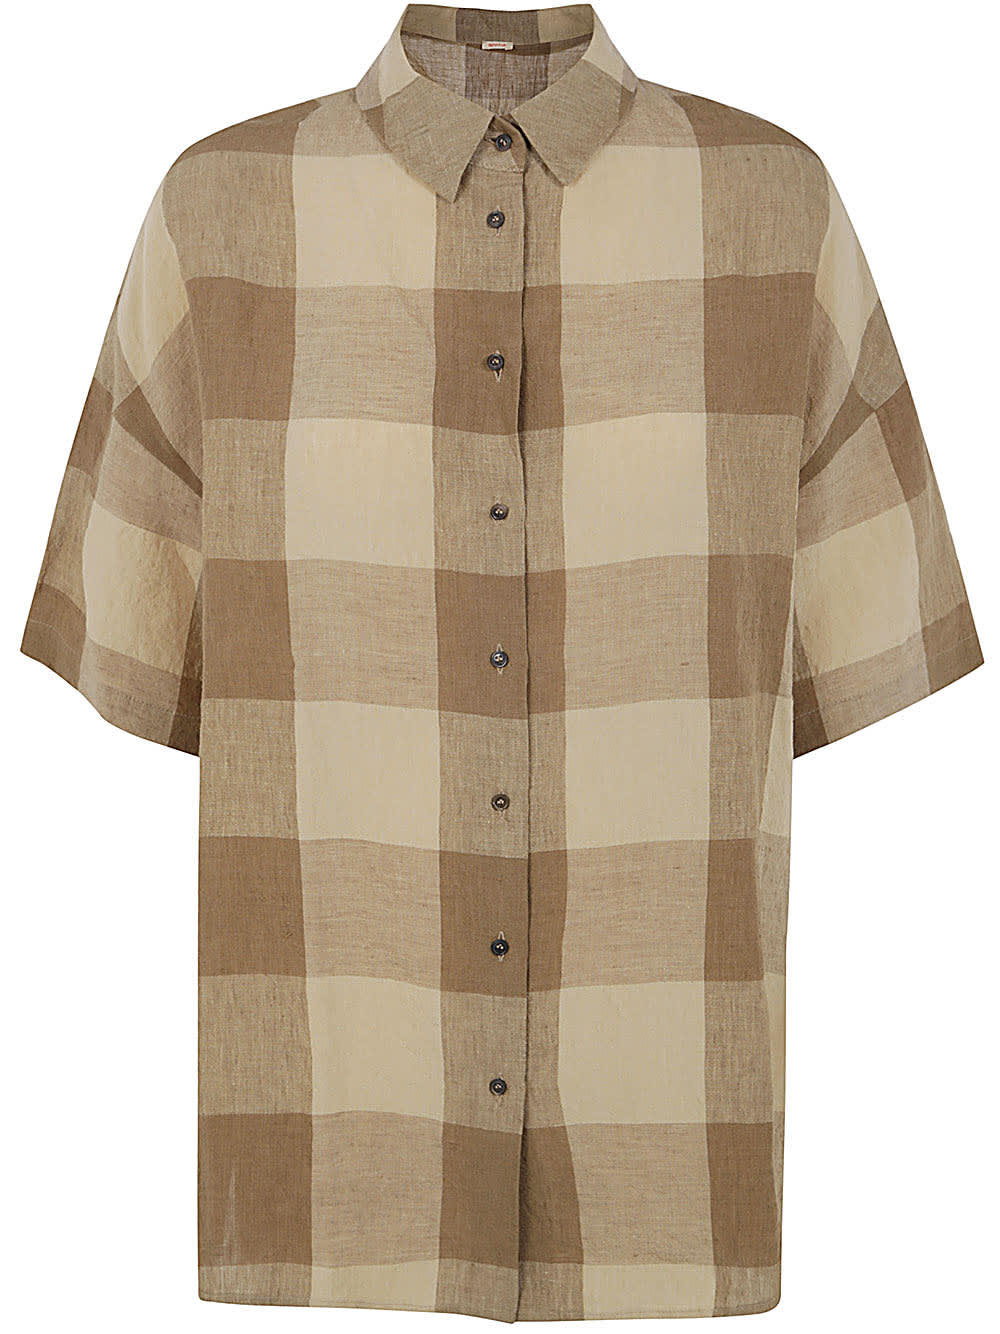 Apuntob Short Sleeves Shirt In Brown